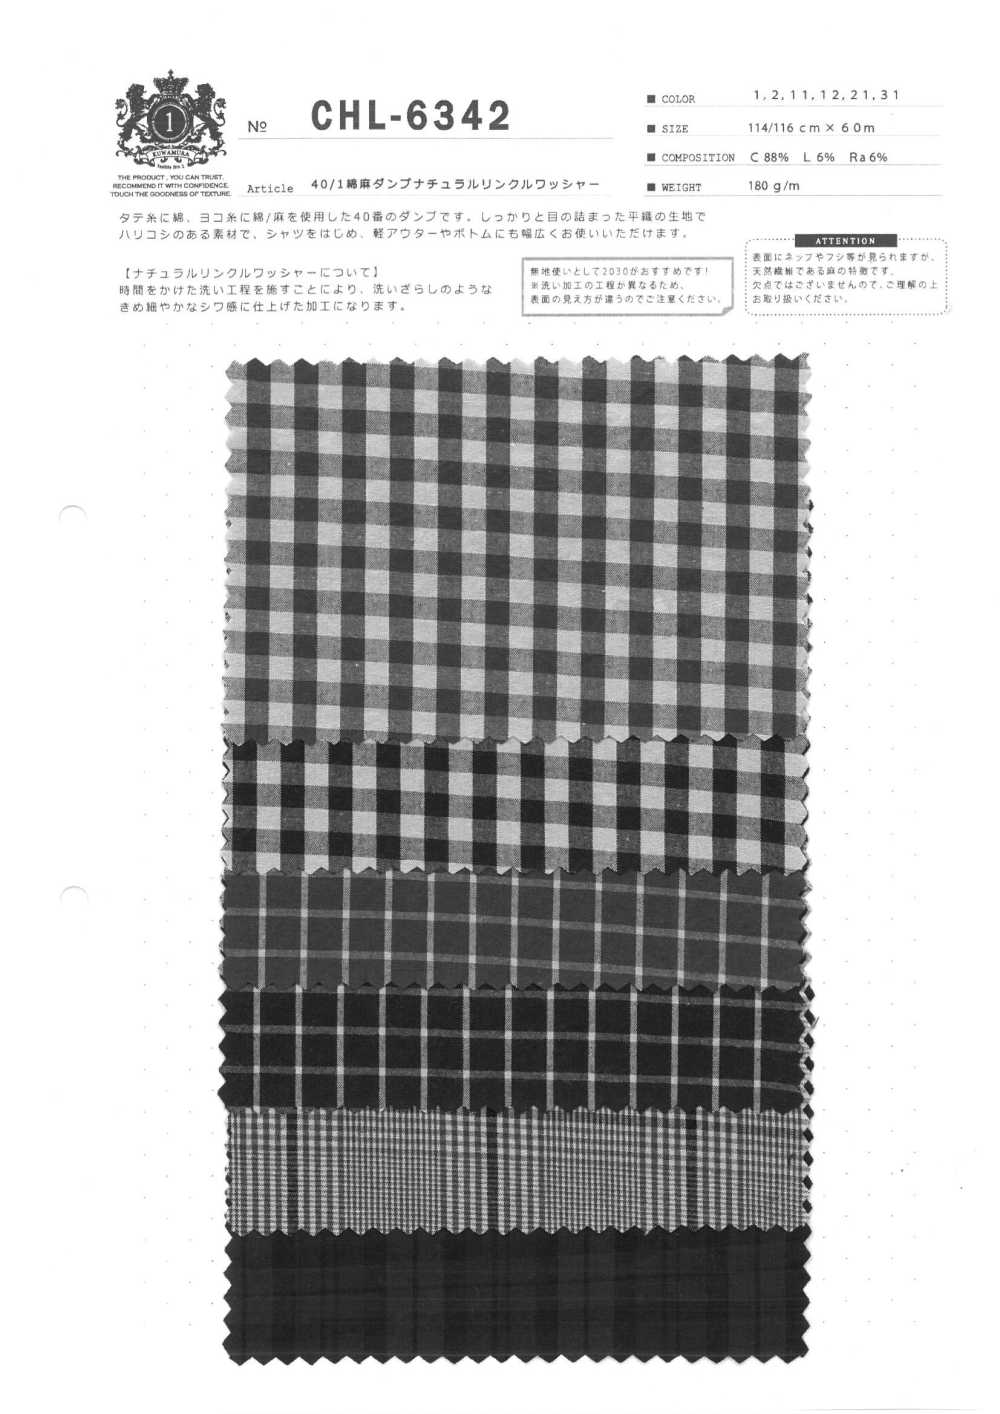 CHL-6342 40/1 Lino Down Proof Natural Wrinkle Washer Processing[Tessile / Tessuto] Fibra Di Kuwamura